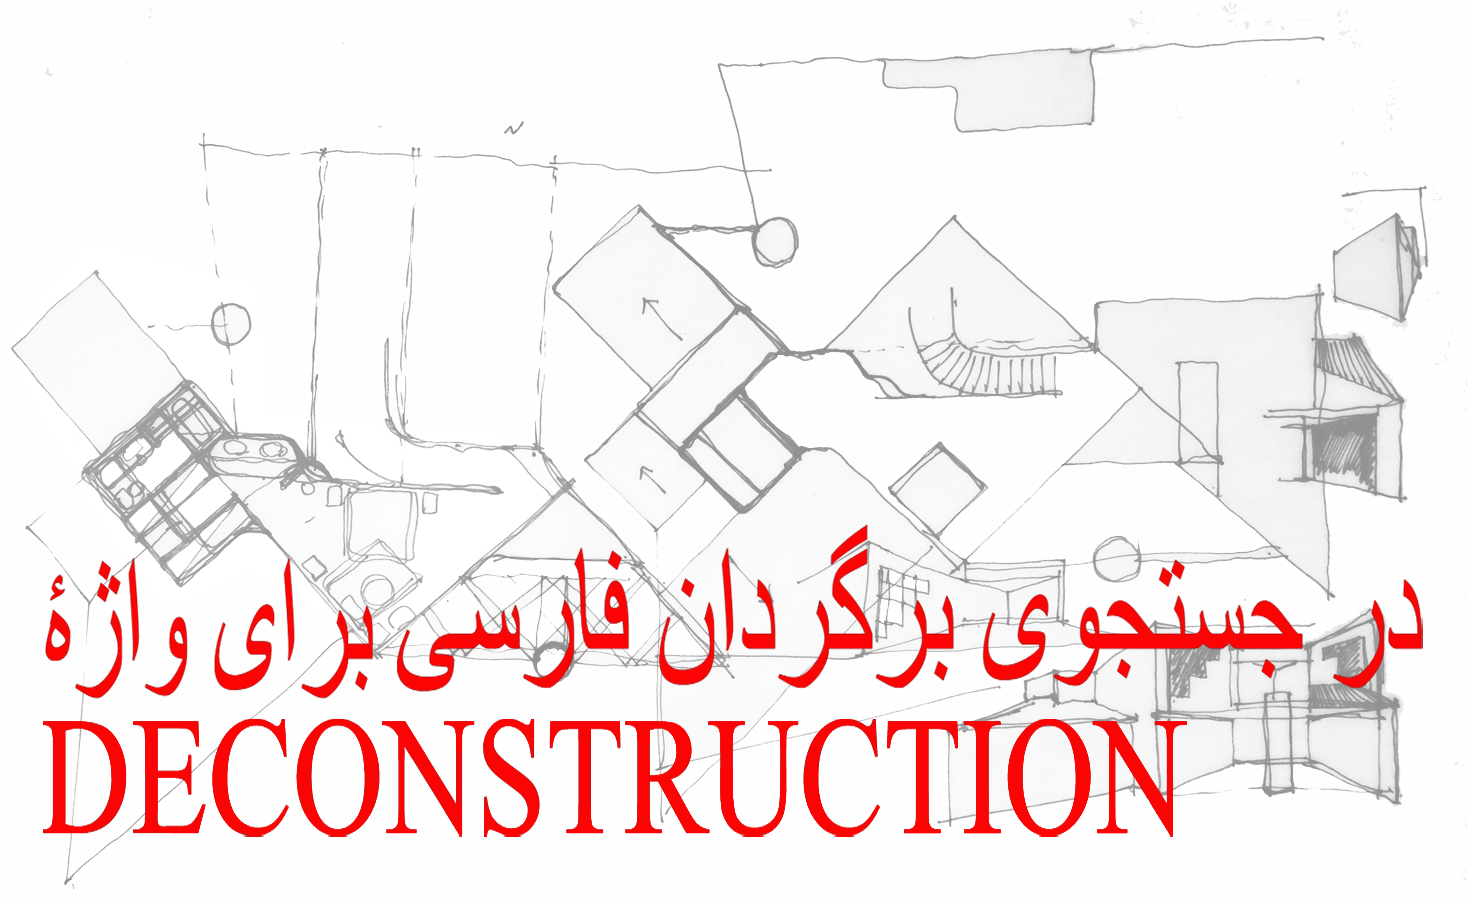 DECONSTRUCTION.jpg